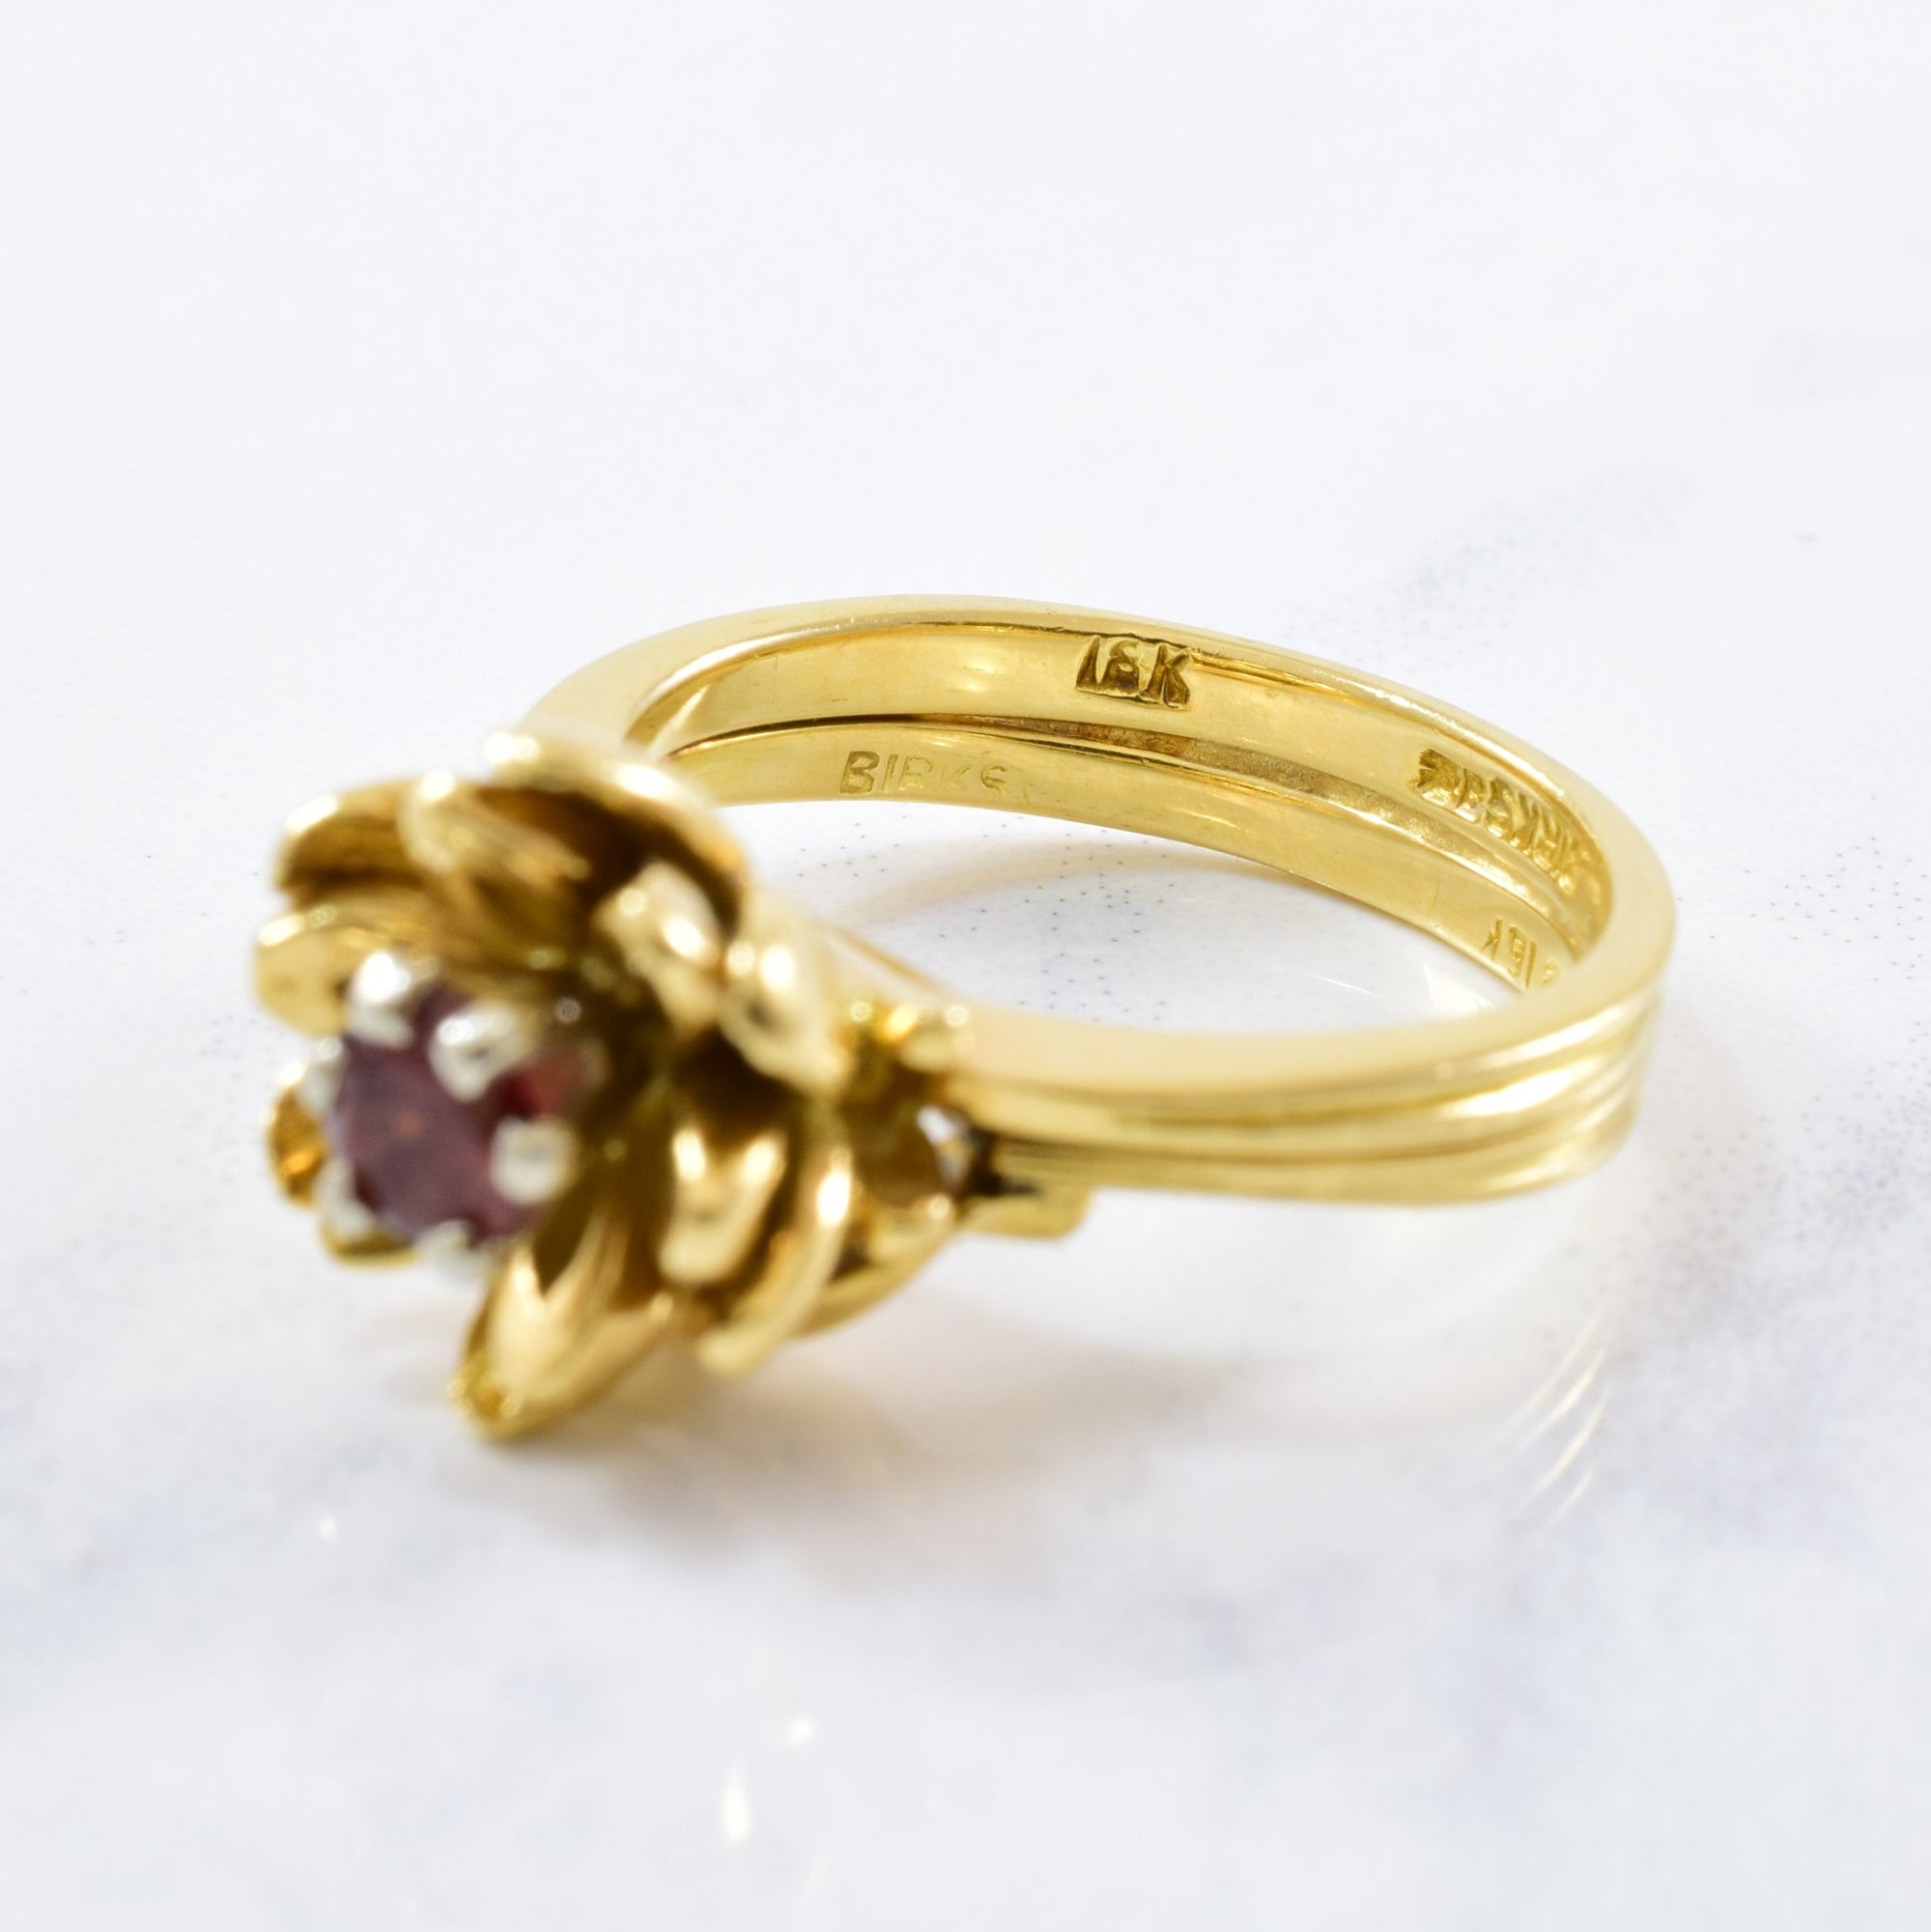 'Birks' Floral Garnet Ring Circa 1950s | 0.20ct | SZ 4.75 |